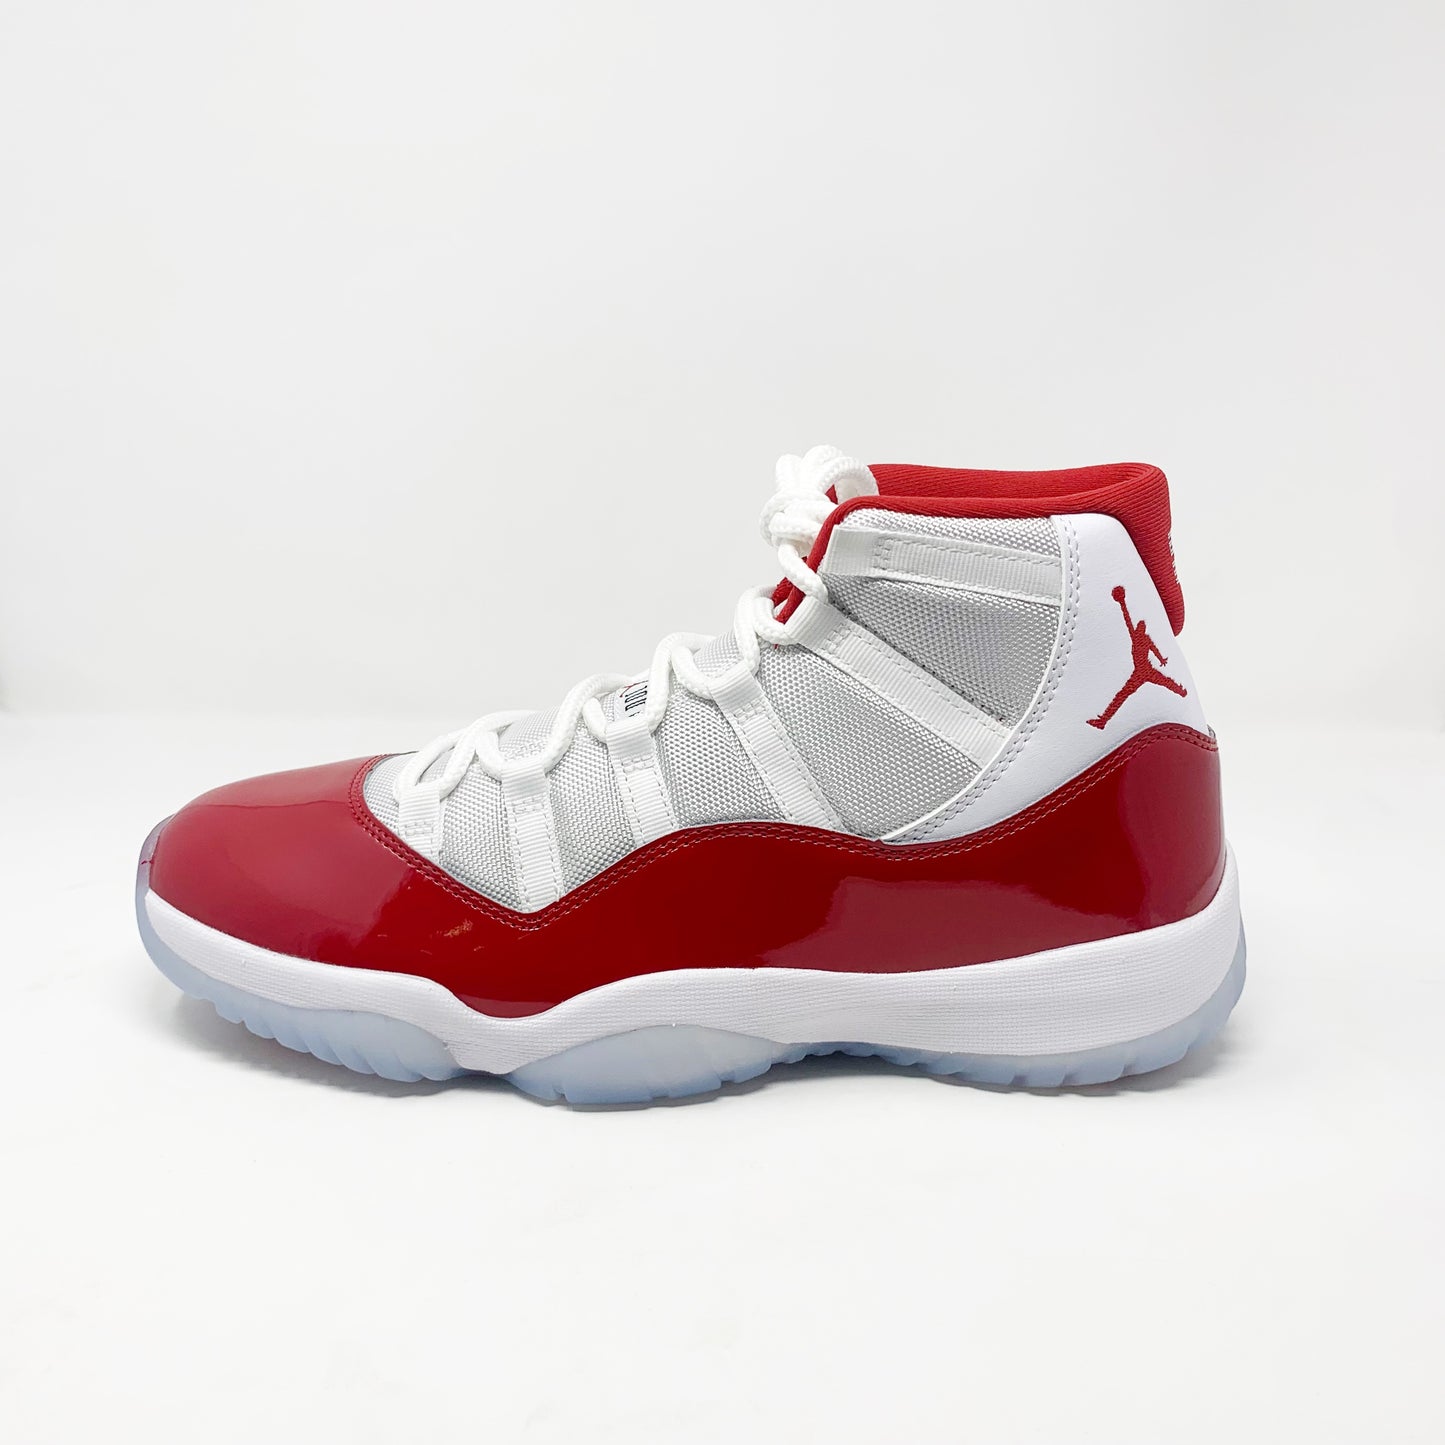 Jordan Retro 11 “Cherry Red”